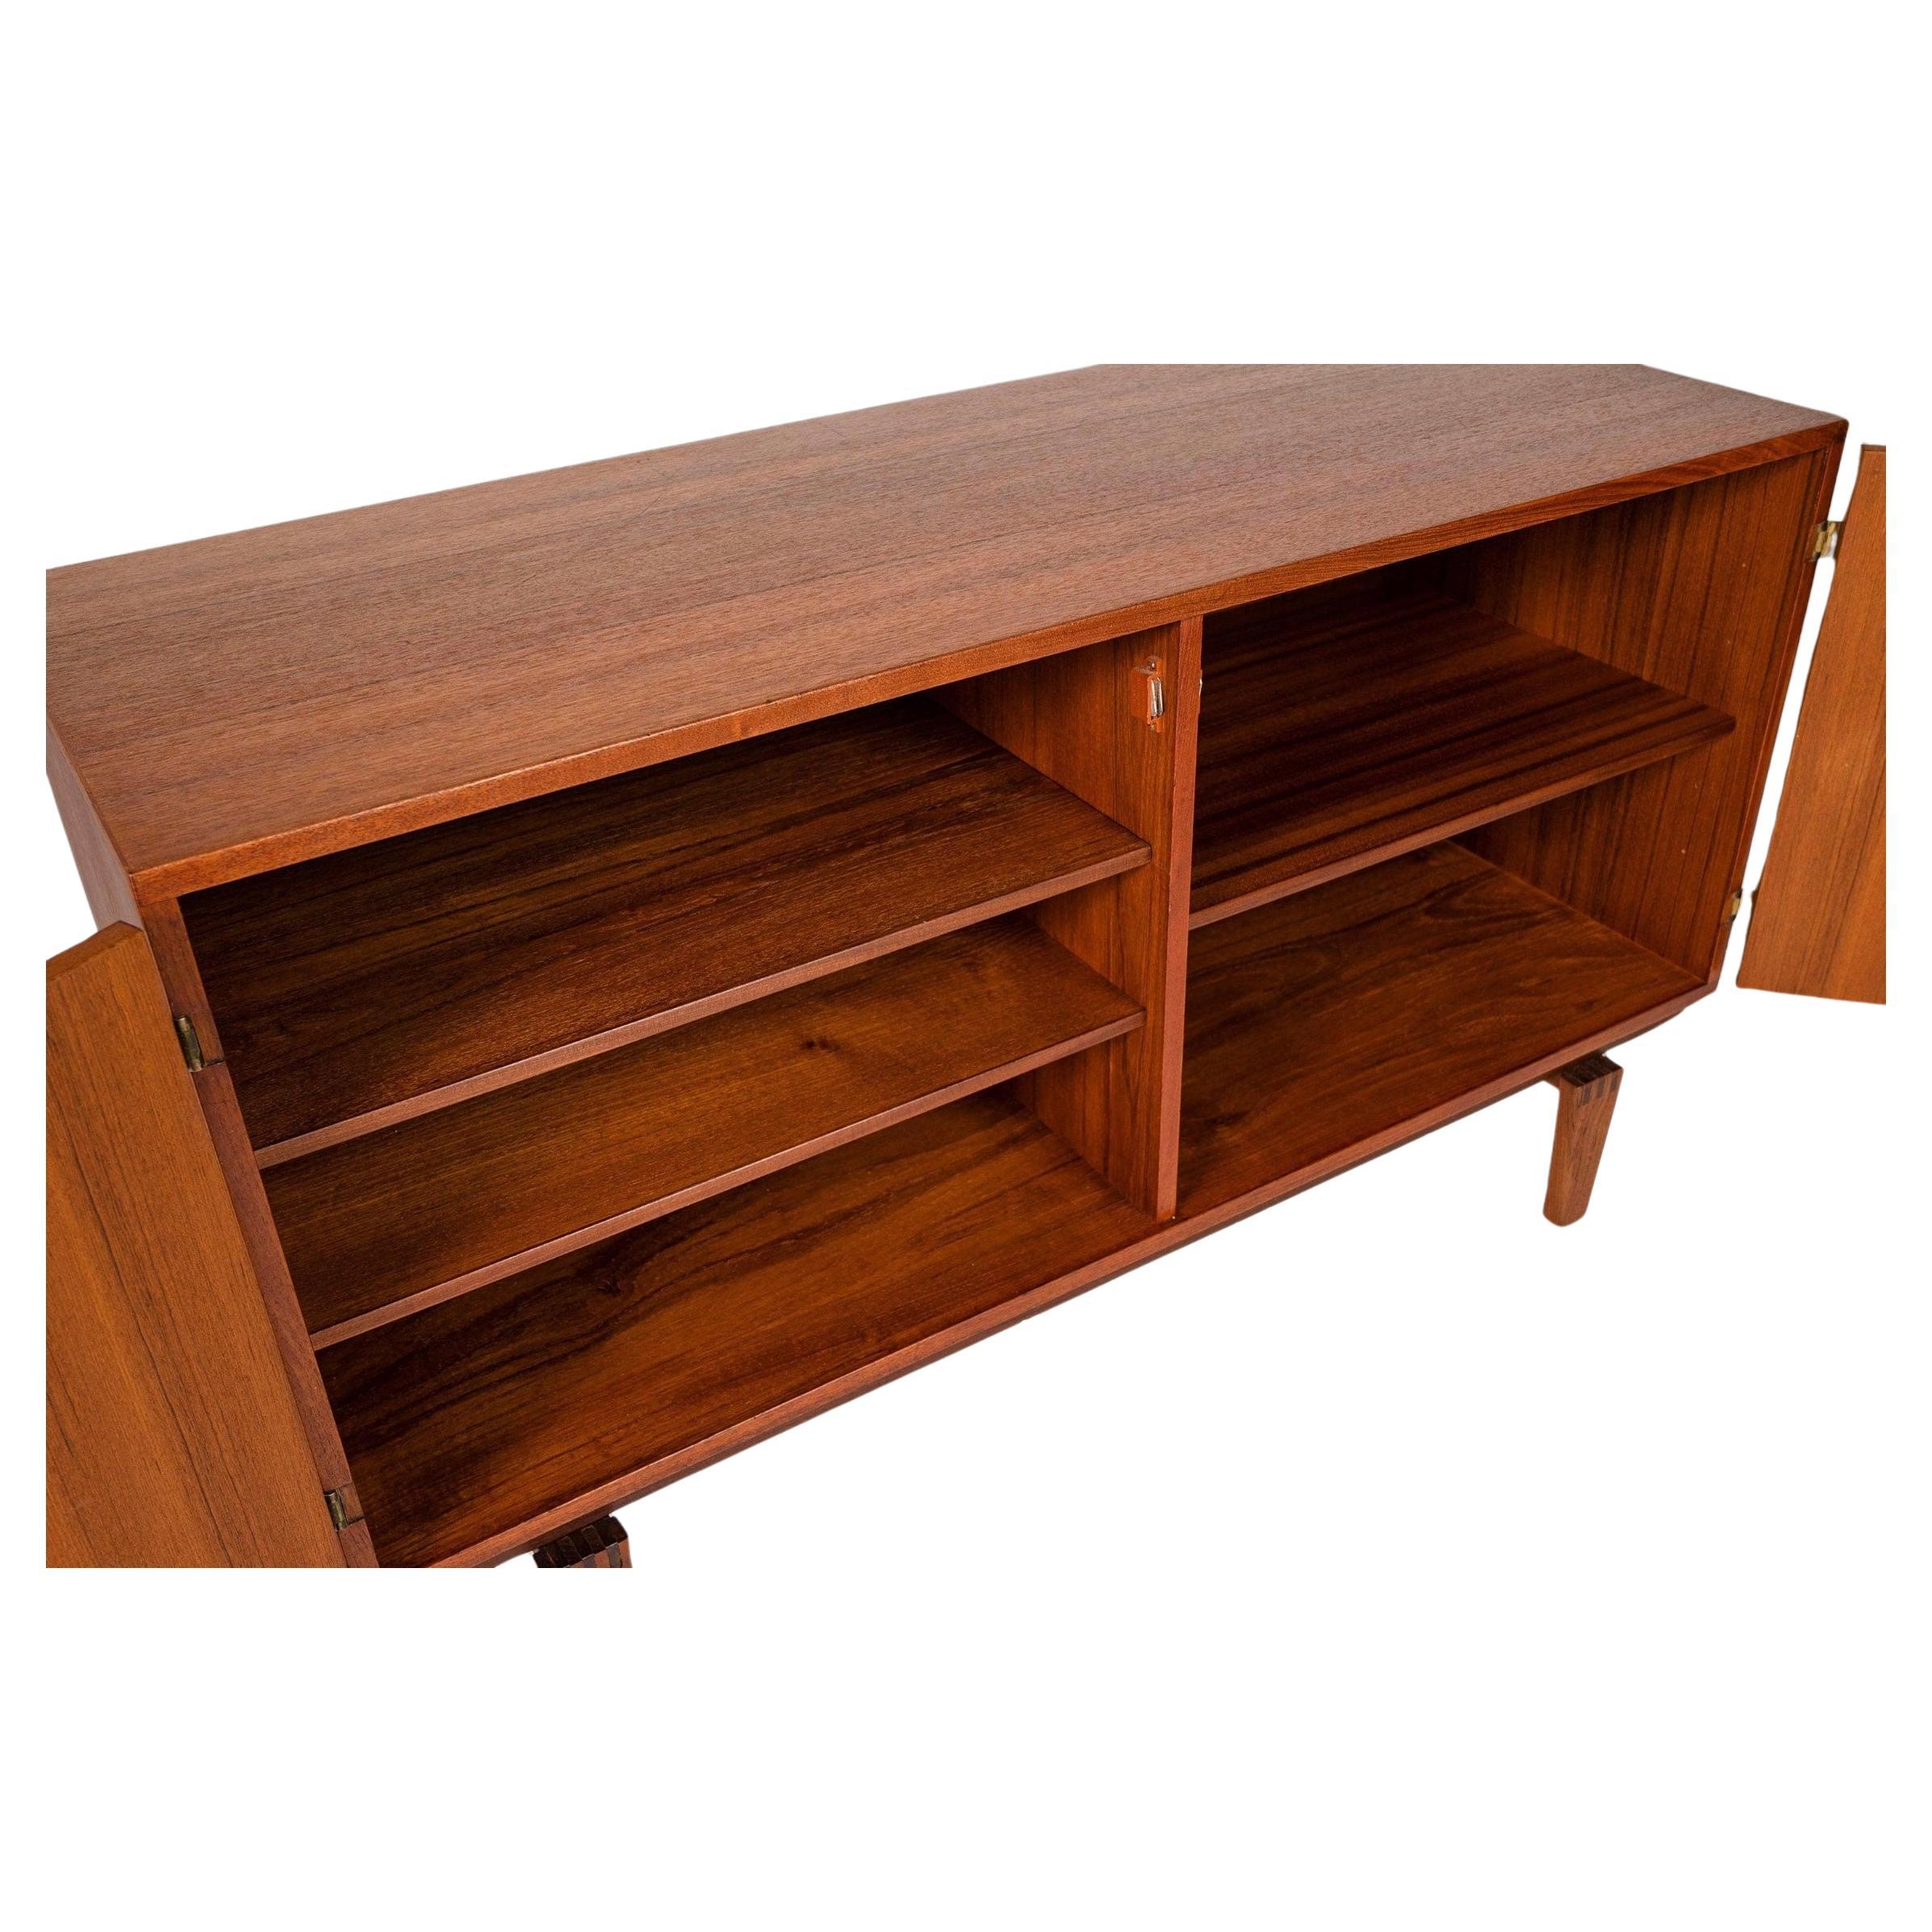 Danish Mid century danish modern sideboard credenza with bookcase shelf unit by Lovig For Sale